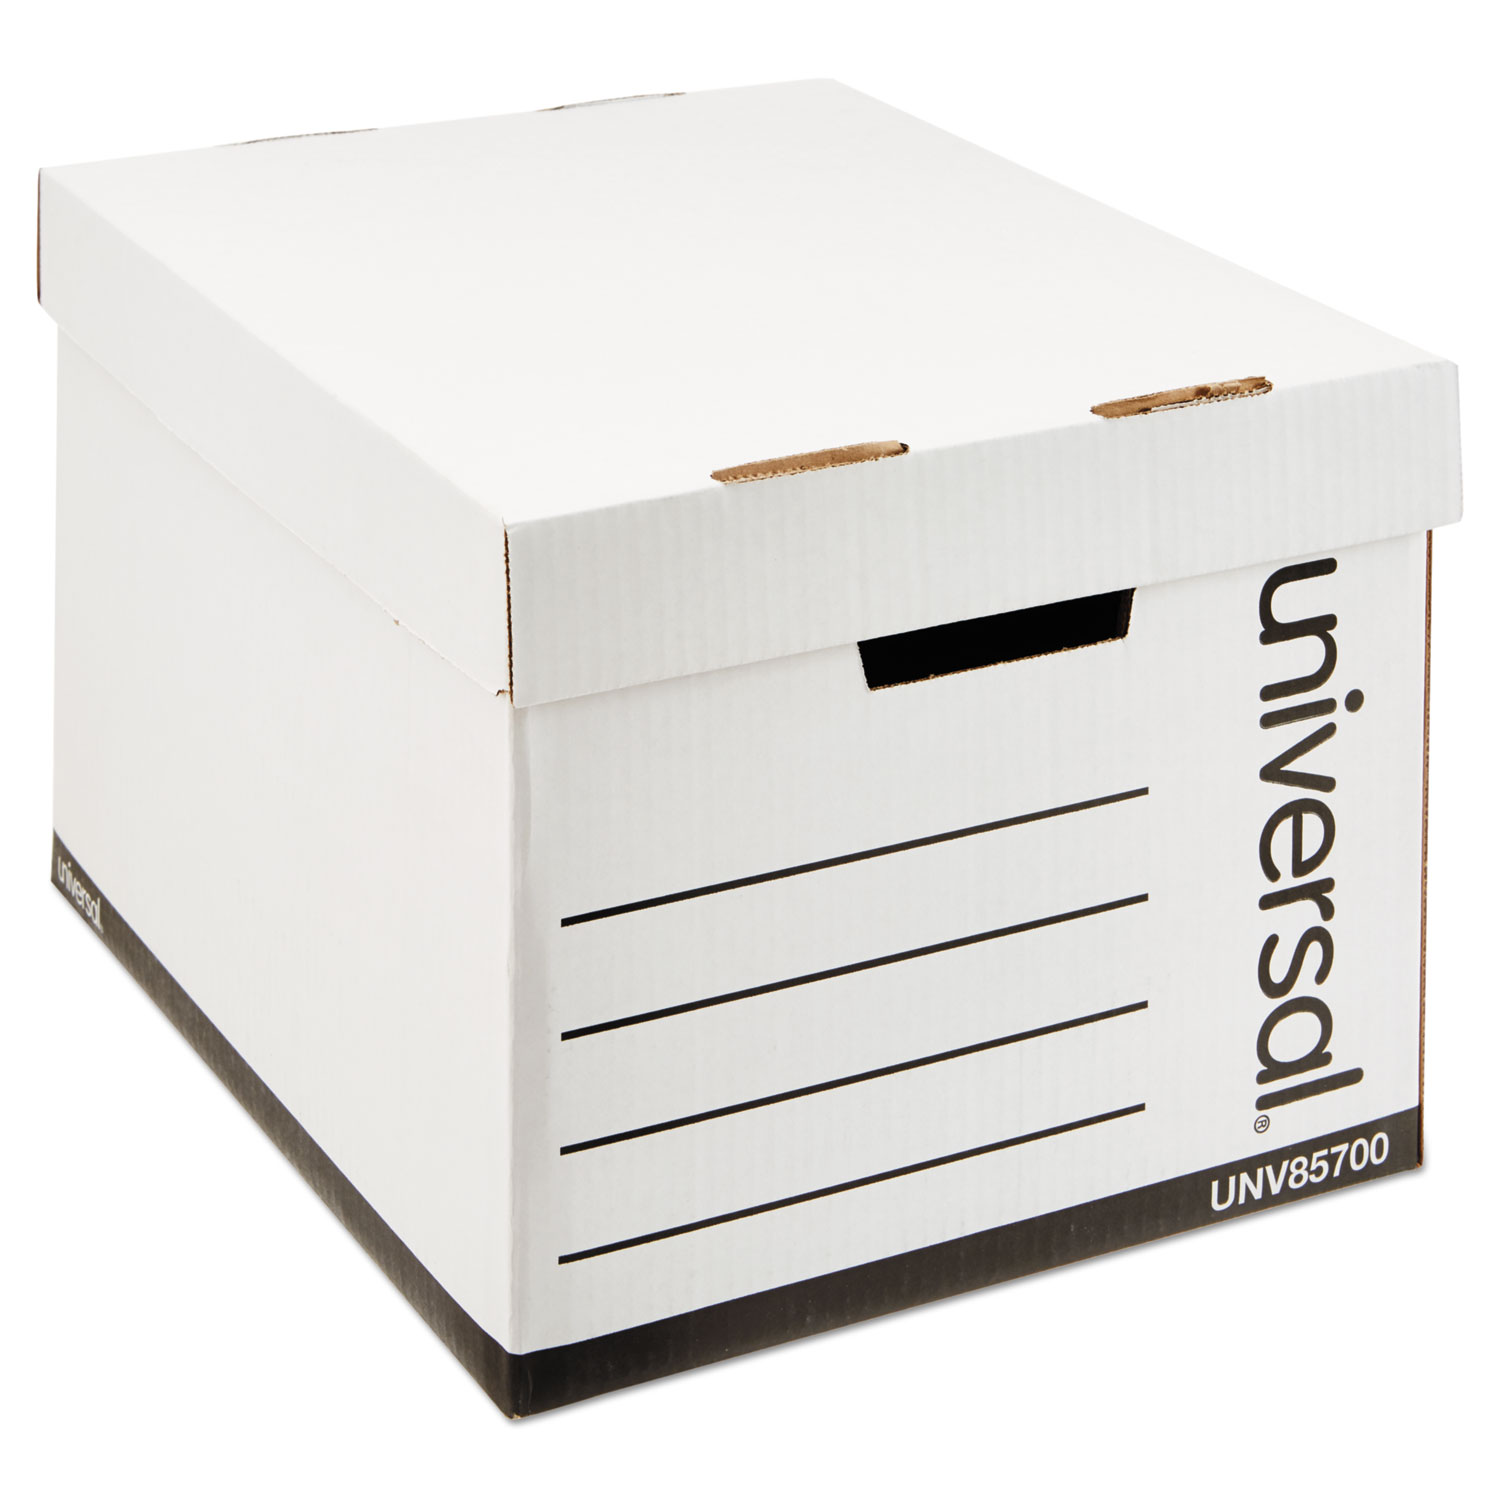  Universal 9523201 Medium-Duty Lift-Off Lid Boxes, Letter/Legal Files, 12 x 15 x 10, White, 12/Carton (UNV85700) 